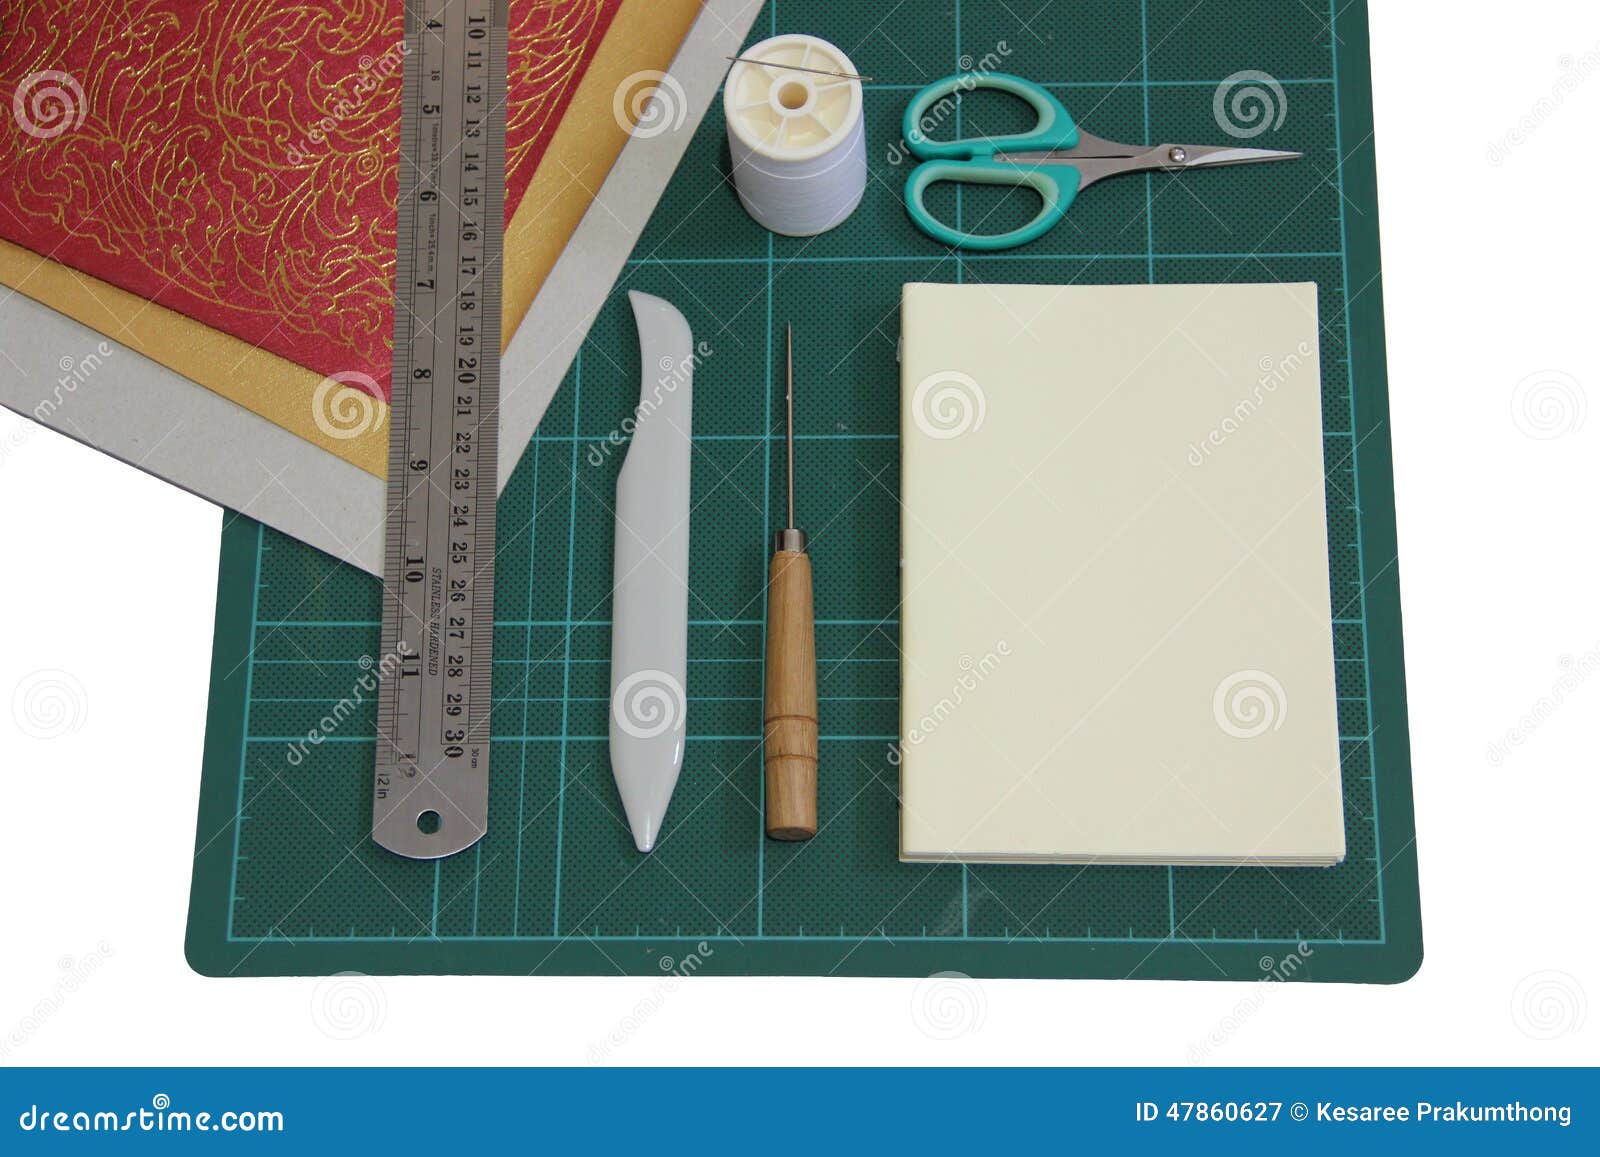 Hard Cover Book Binding Materials Stock Image - Image of textblock, bone:  47860627